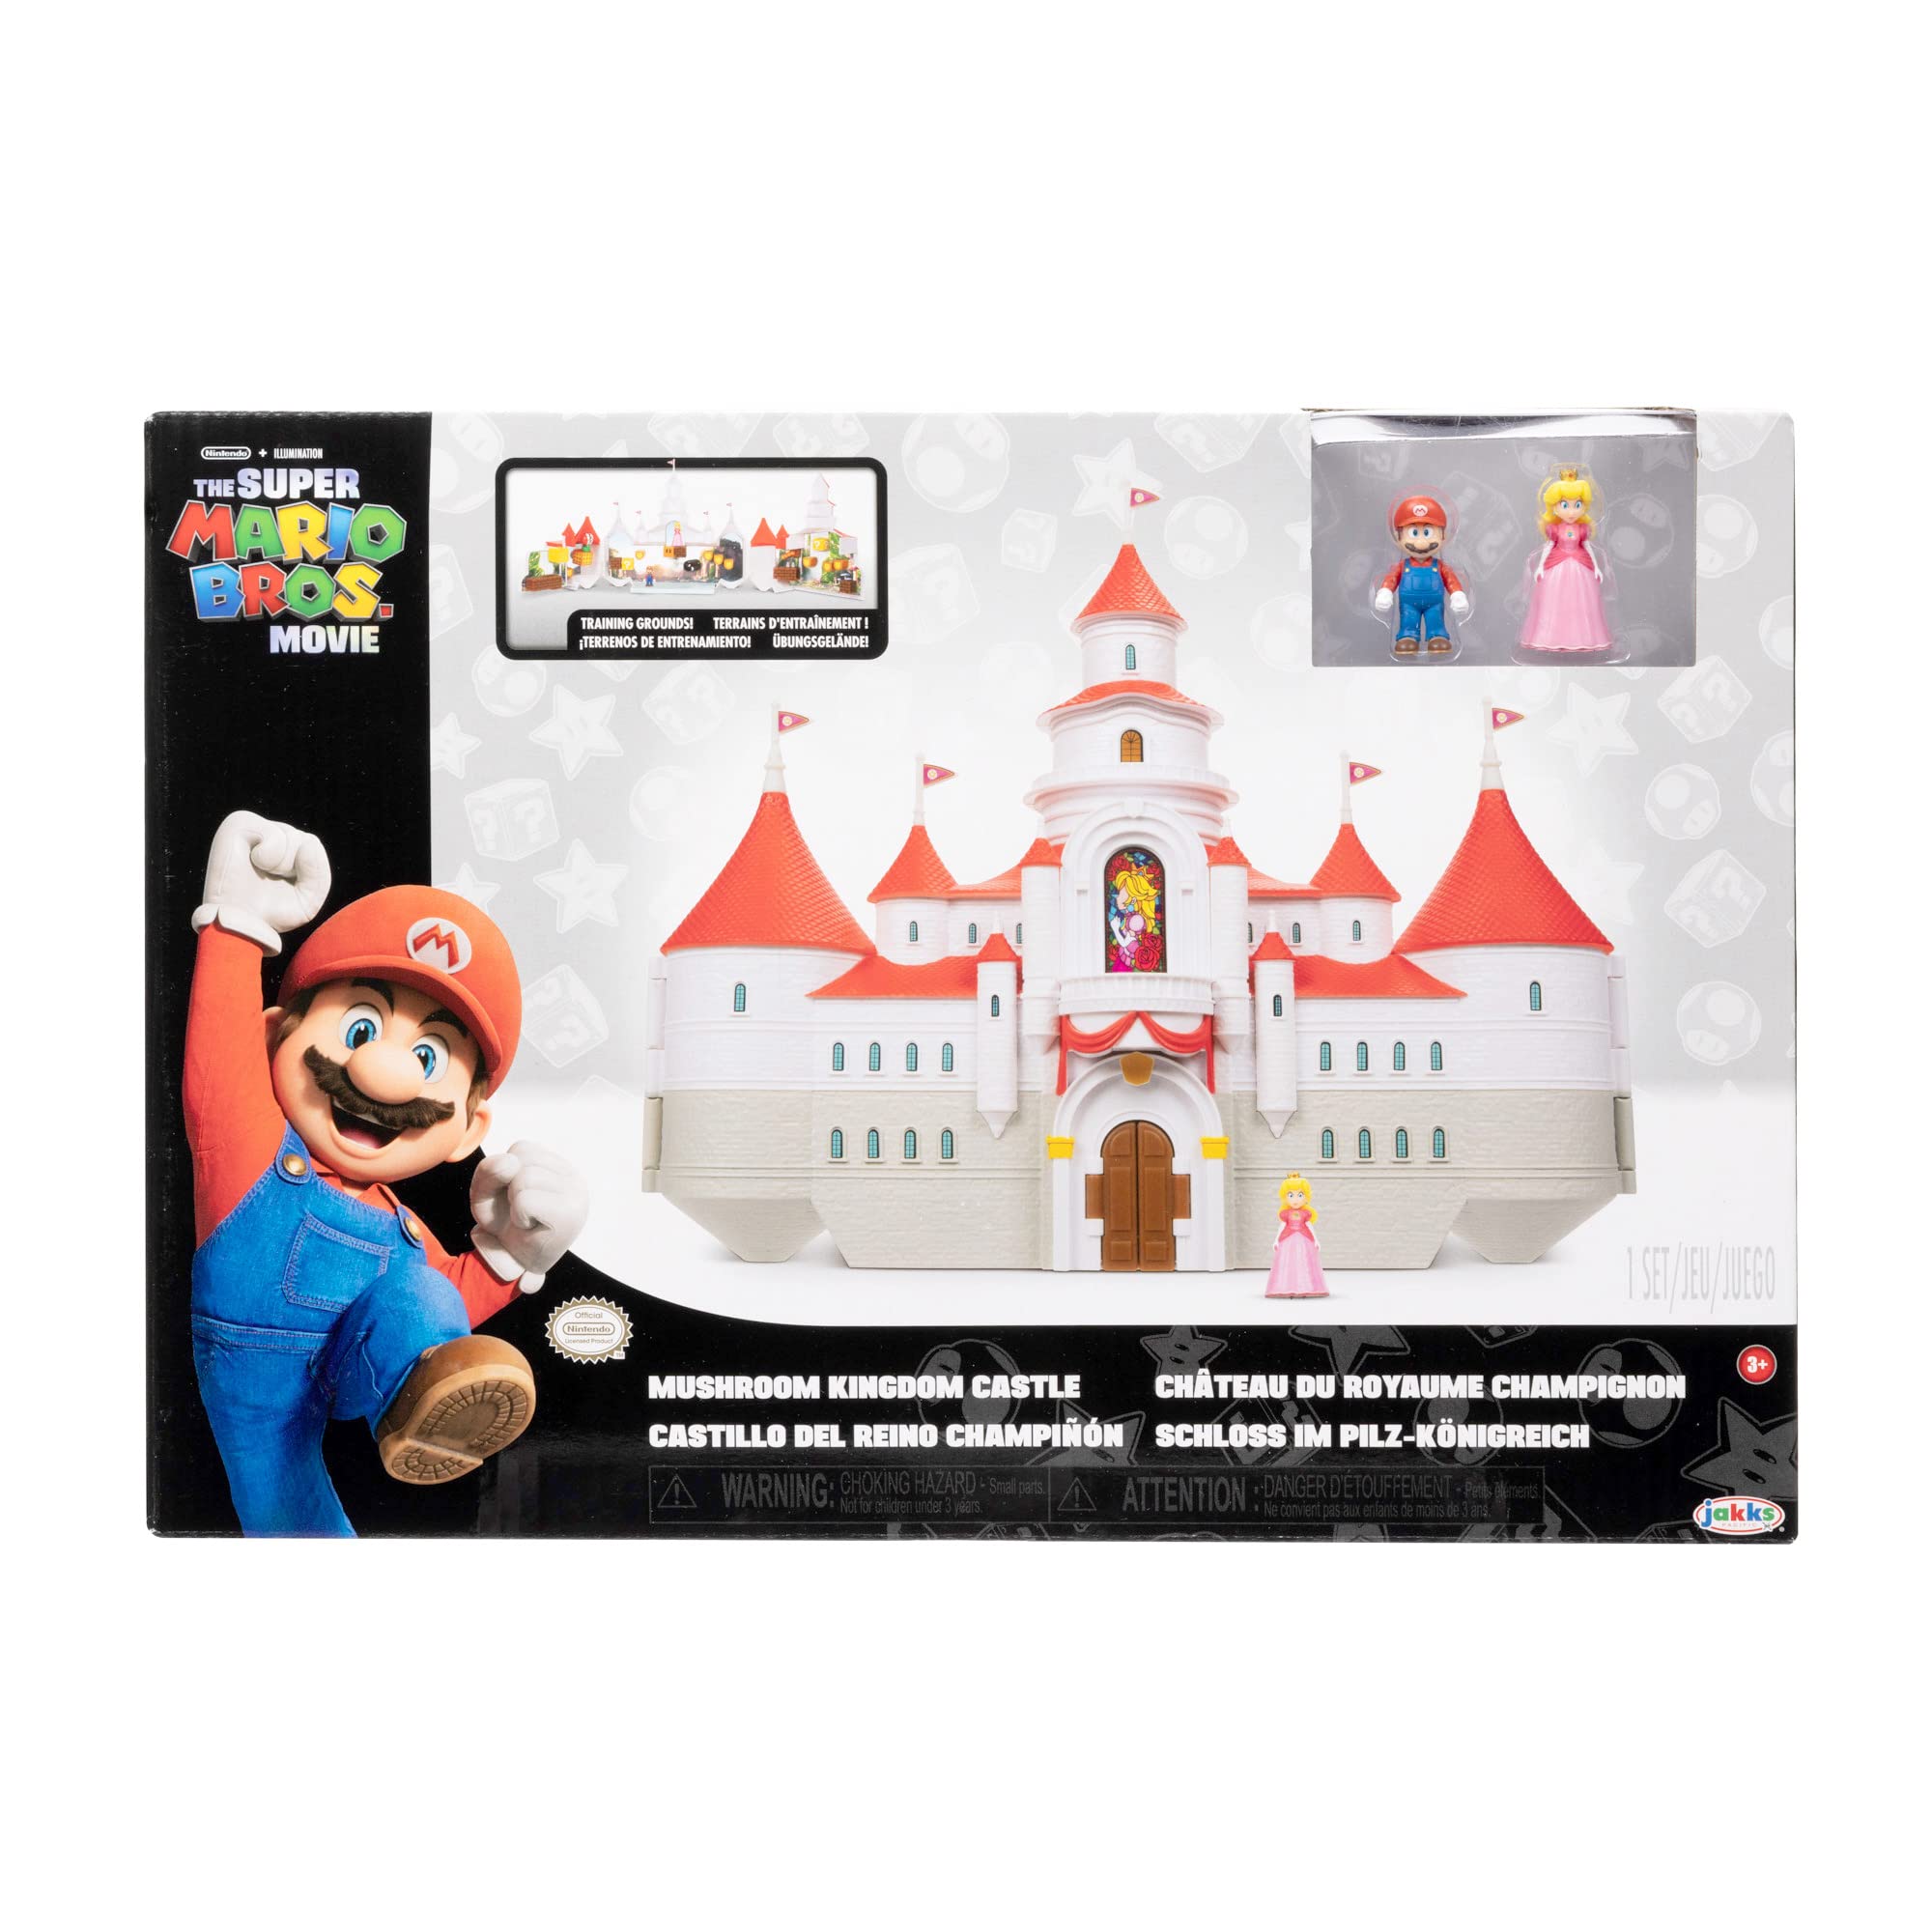 The Super Mario Bros. Movie – Mushroom Kingdom Castle Playset with Mini 1.25” Mario and Princess Peach Figures